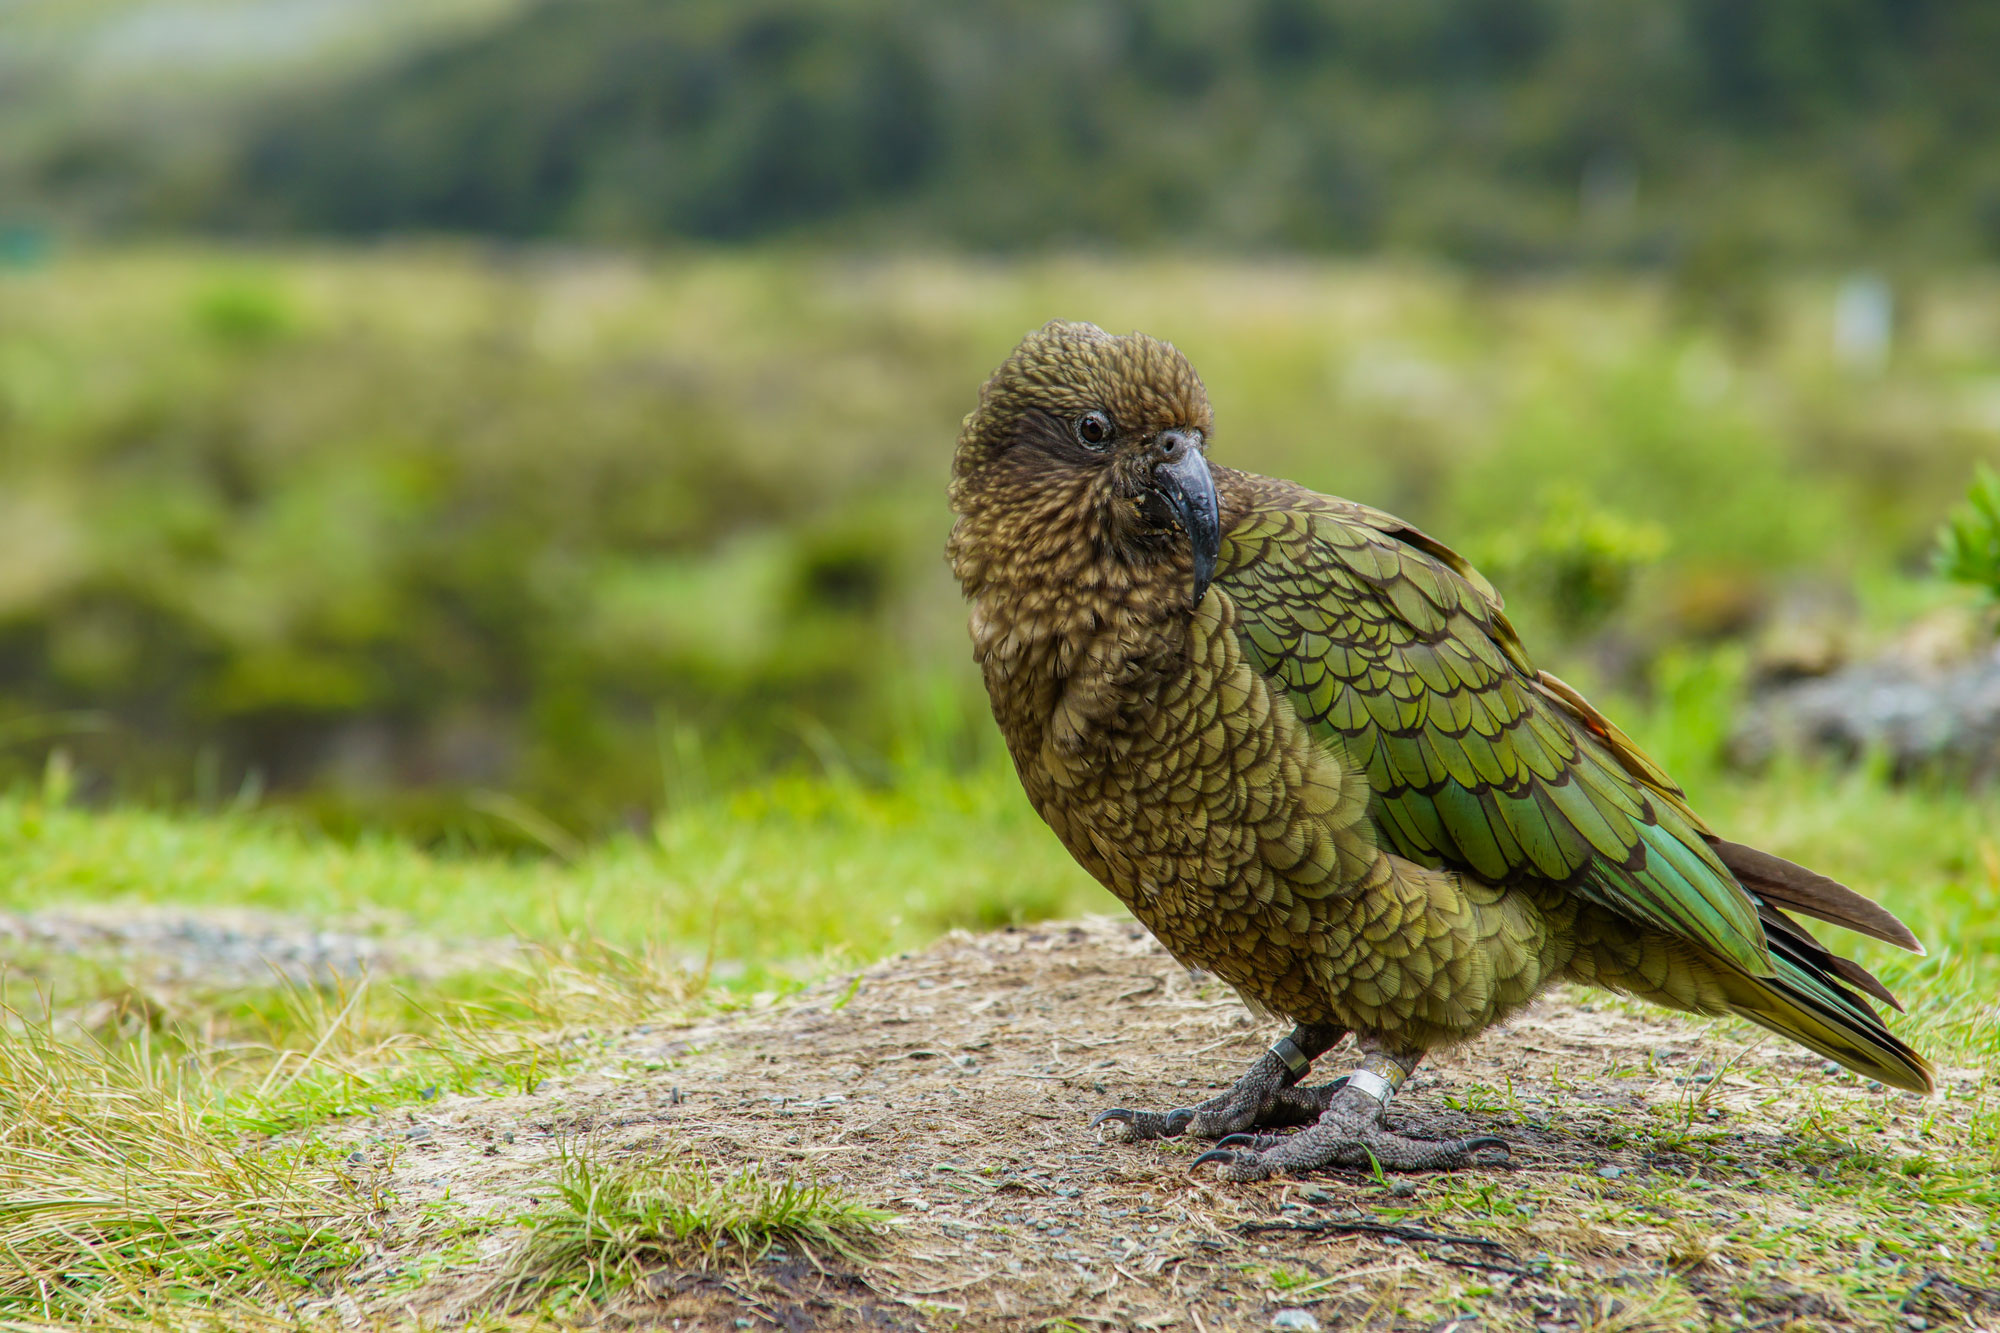 New Zealand Wildlife Holidays | Discover the World